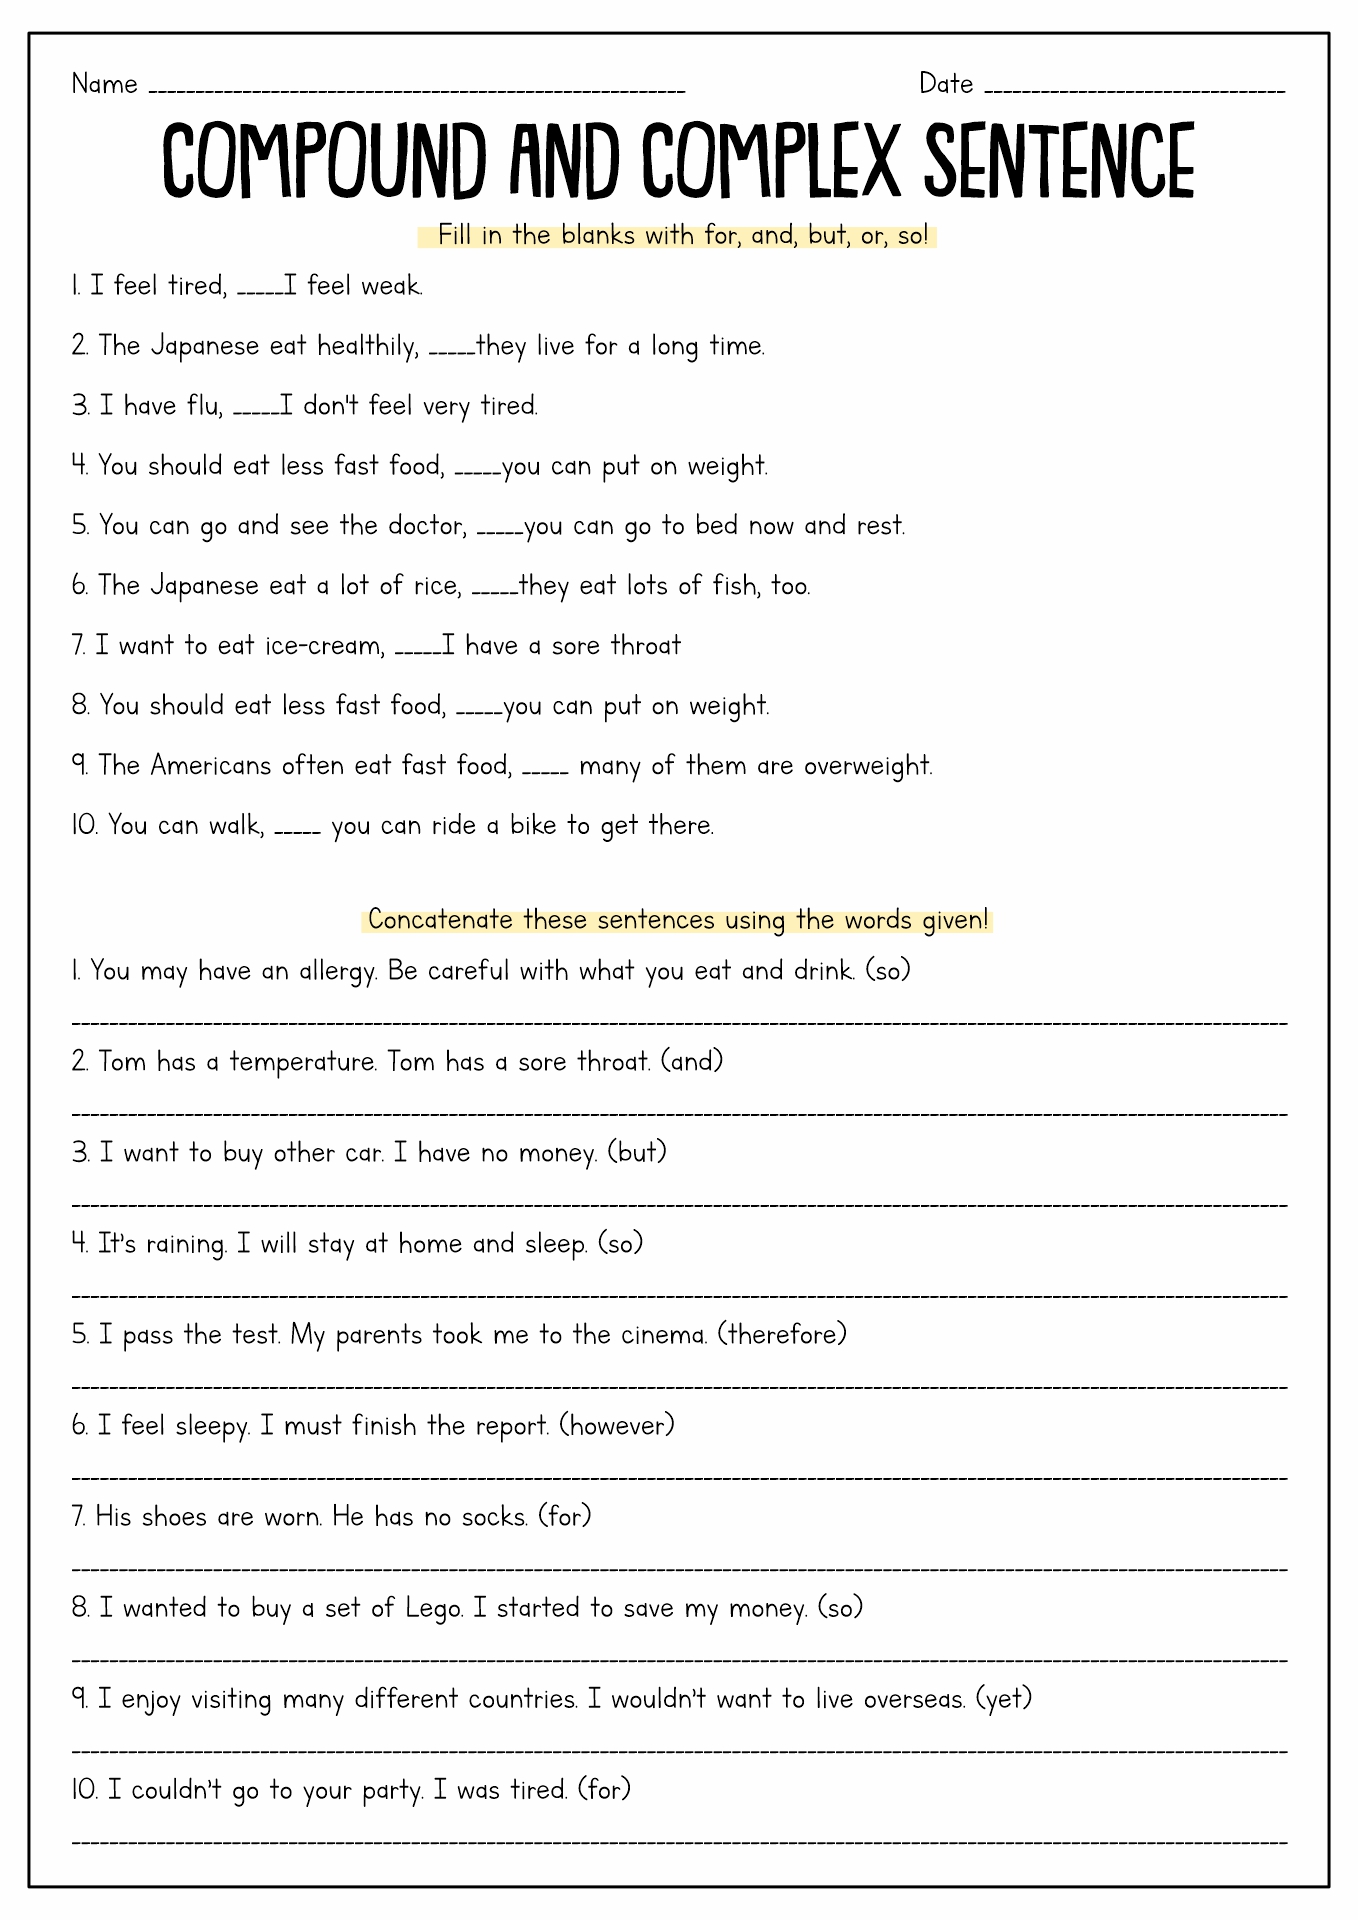 worksheets-for-complex-sentences